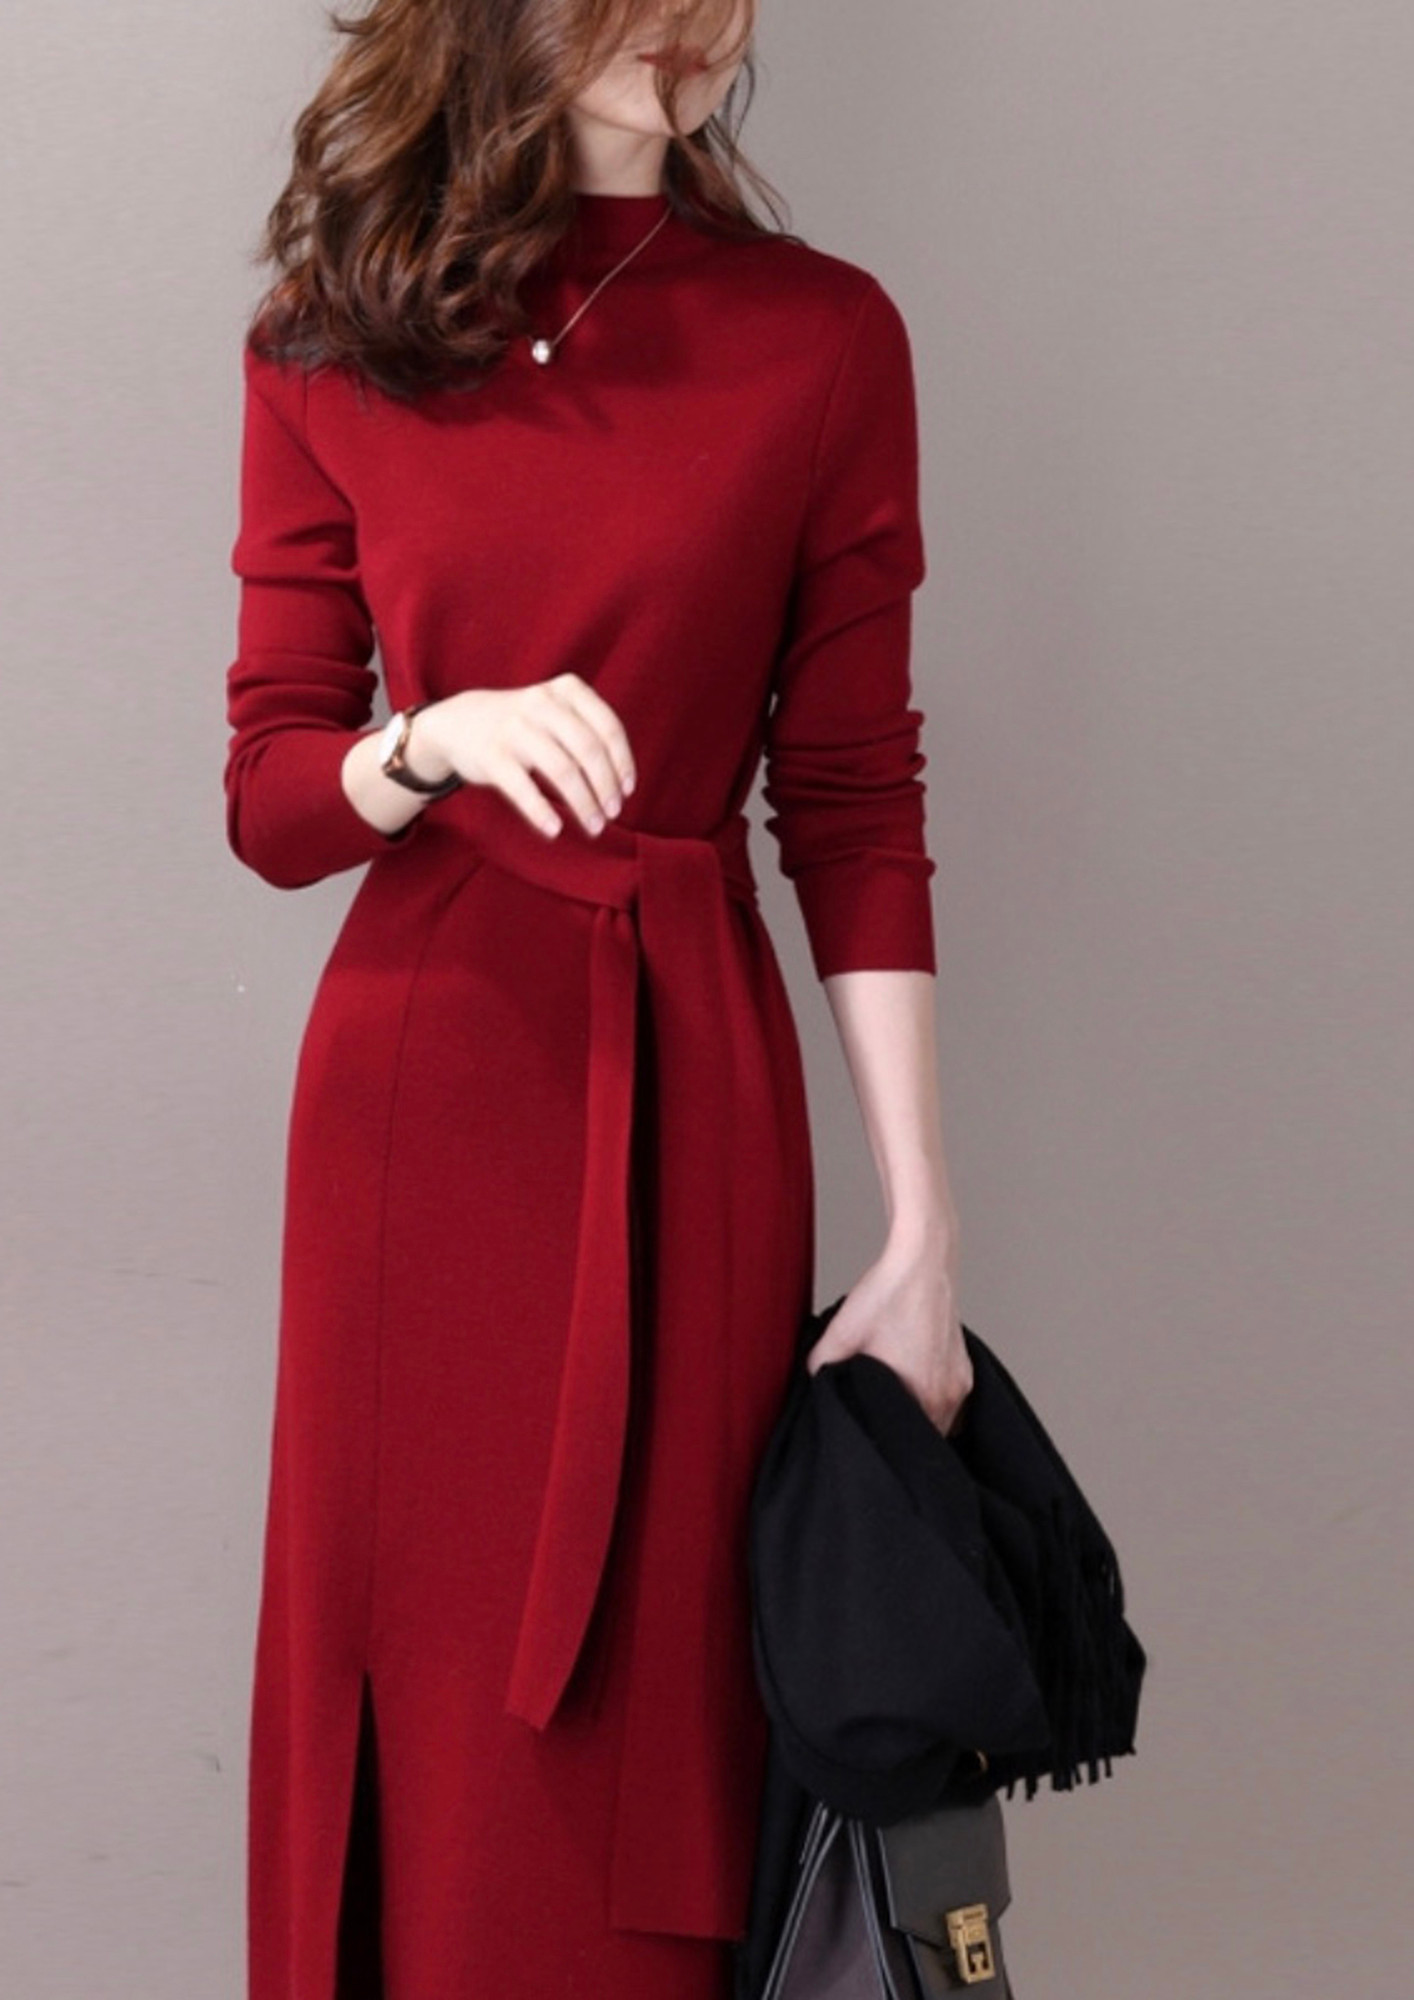 Women's Red Midi Dresses